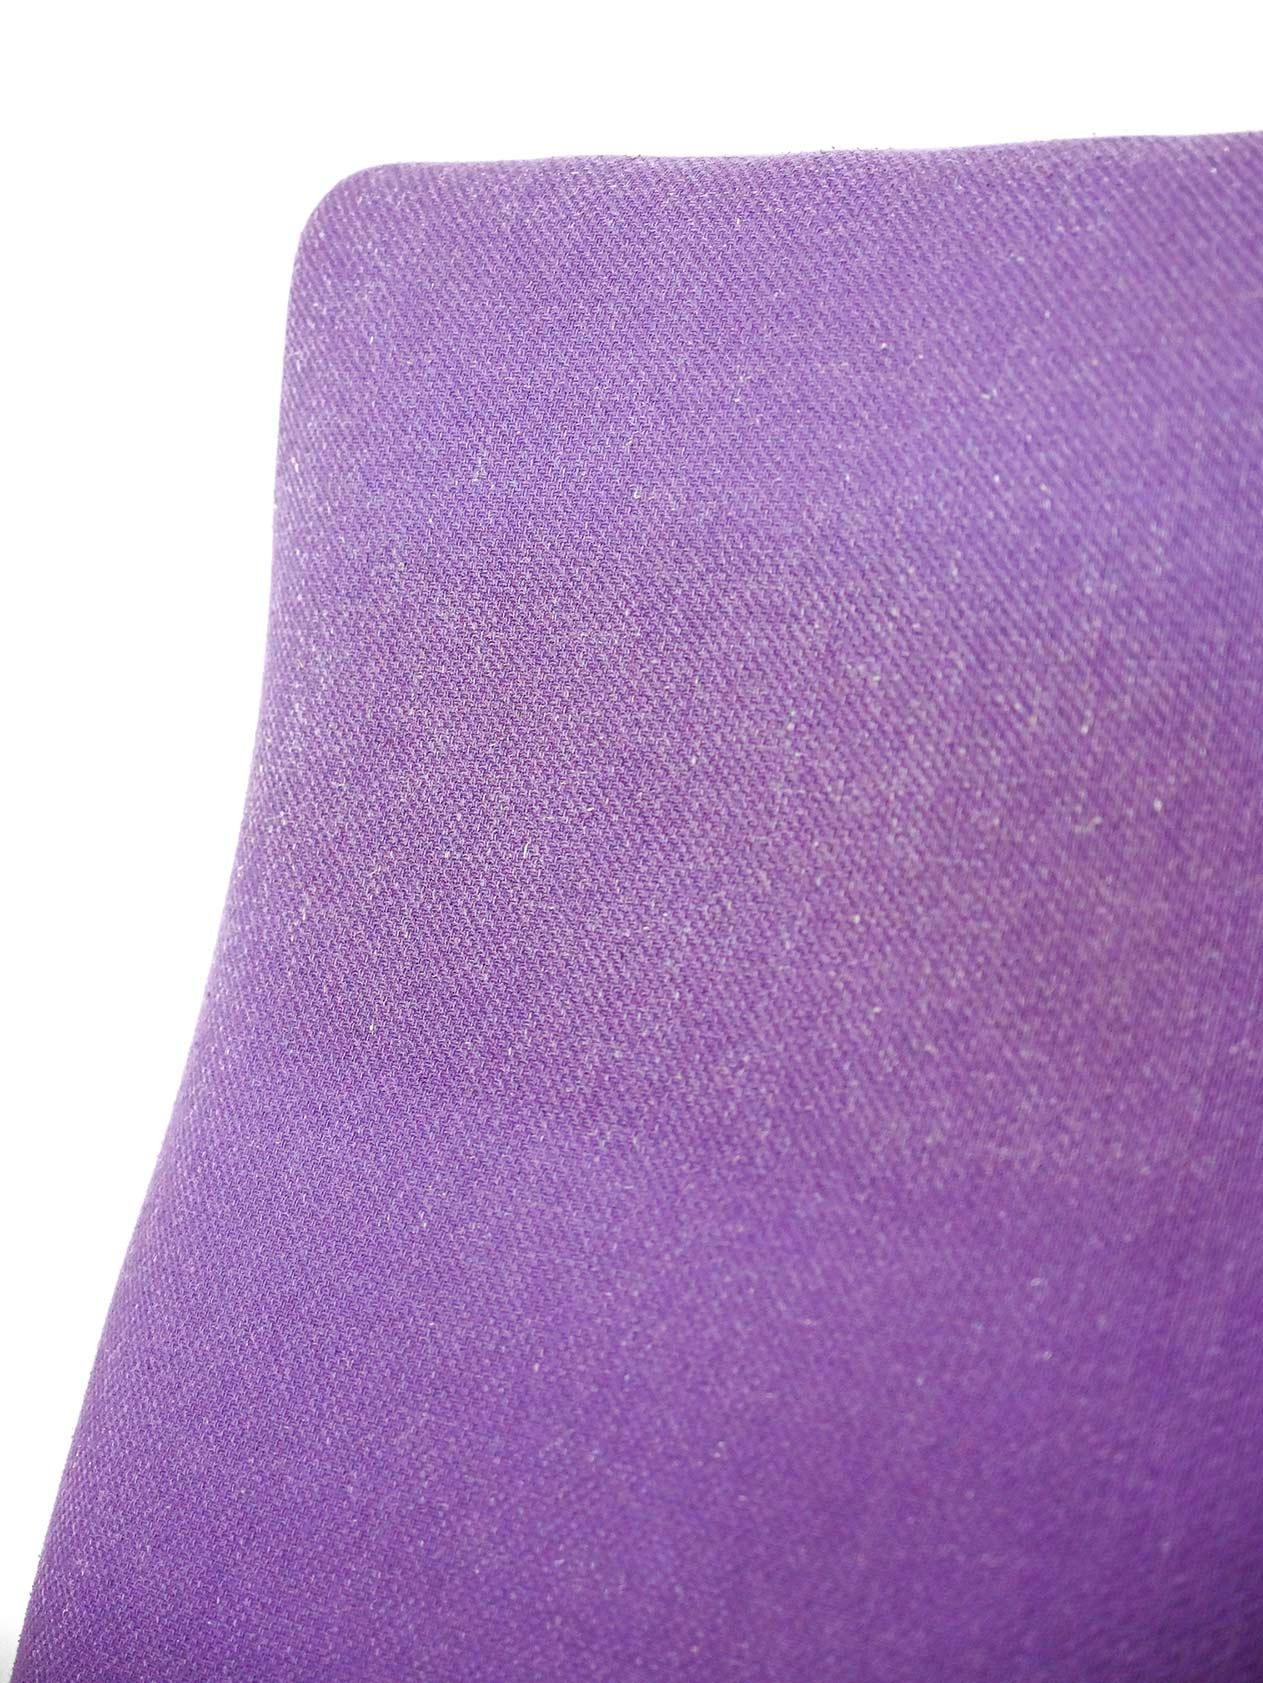 Scandinavian armchair with purple fabric For Sale 7